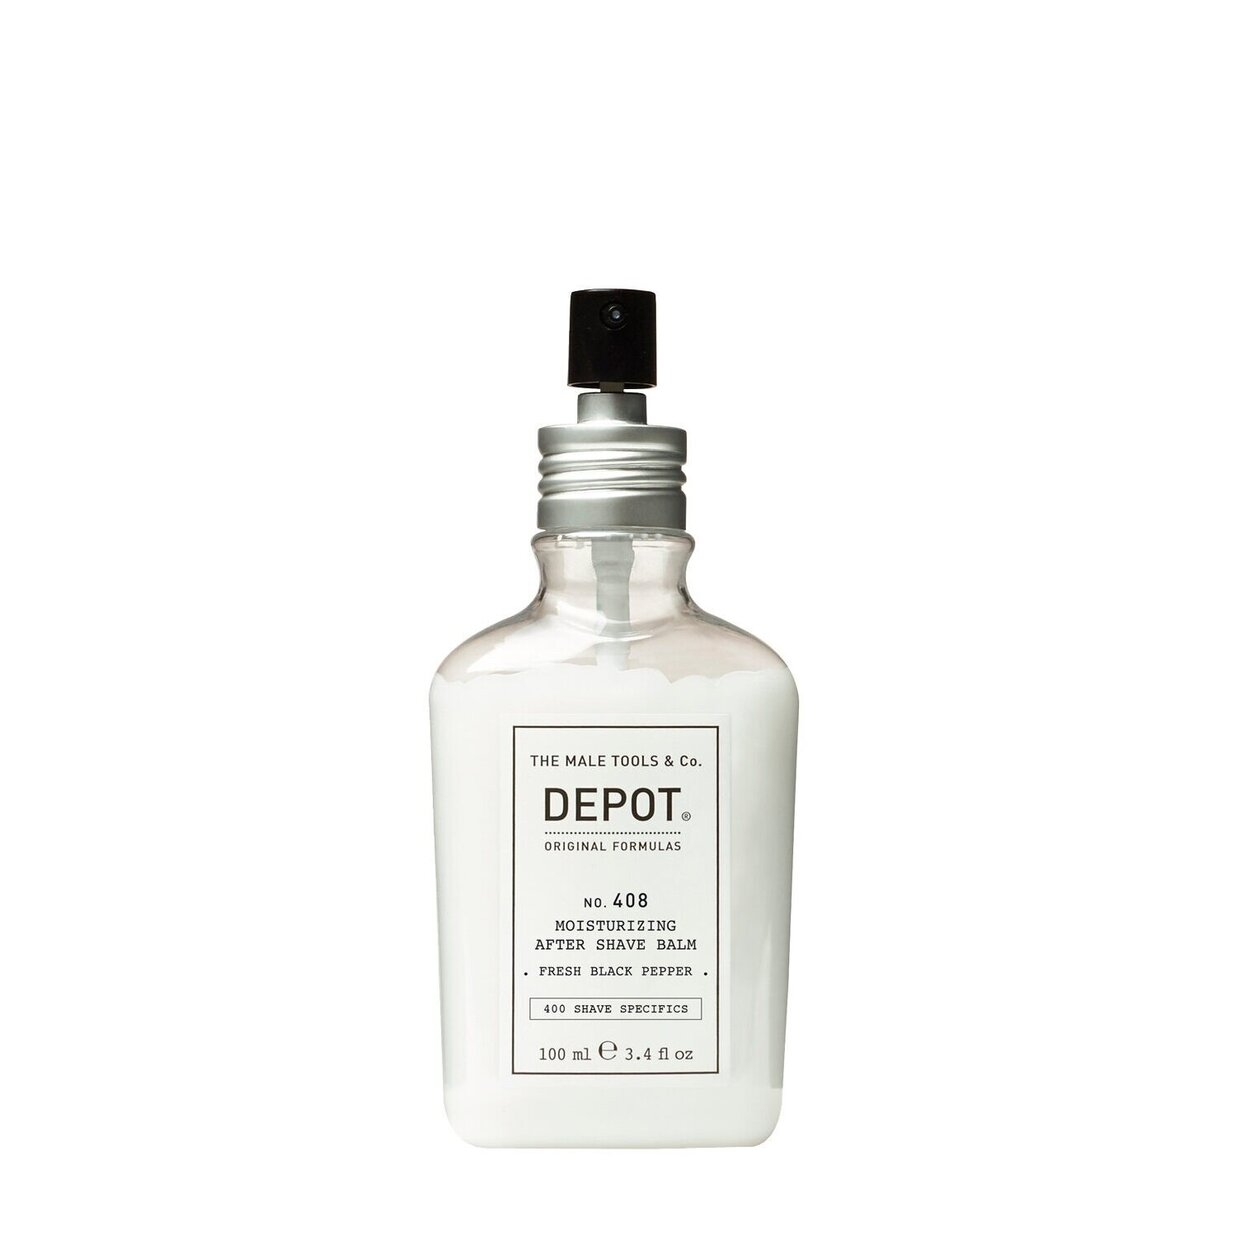 Depot 408 moisturizing aftershave balm fresh black pepper 100ml 